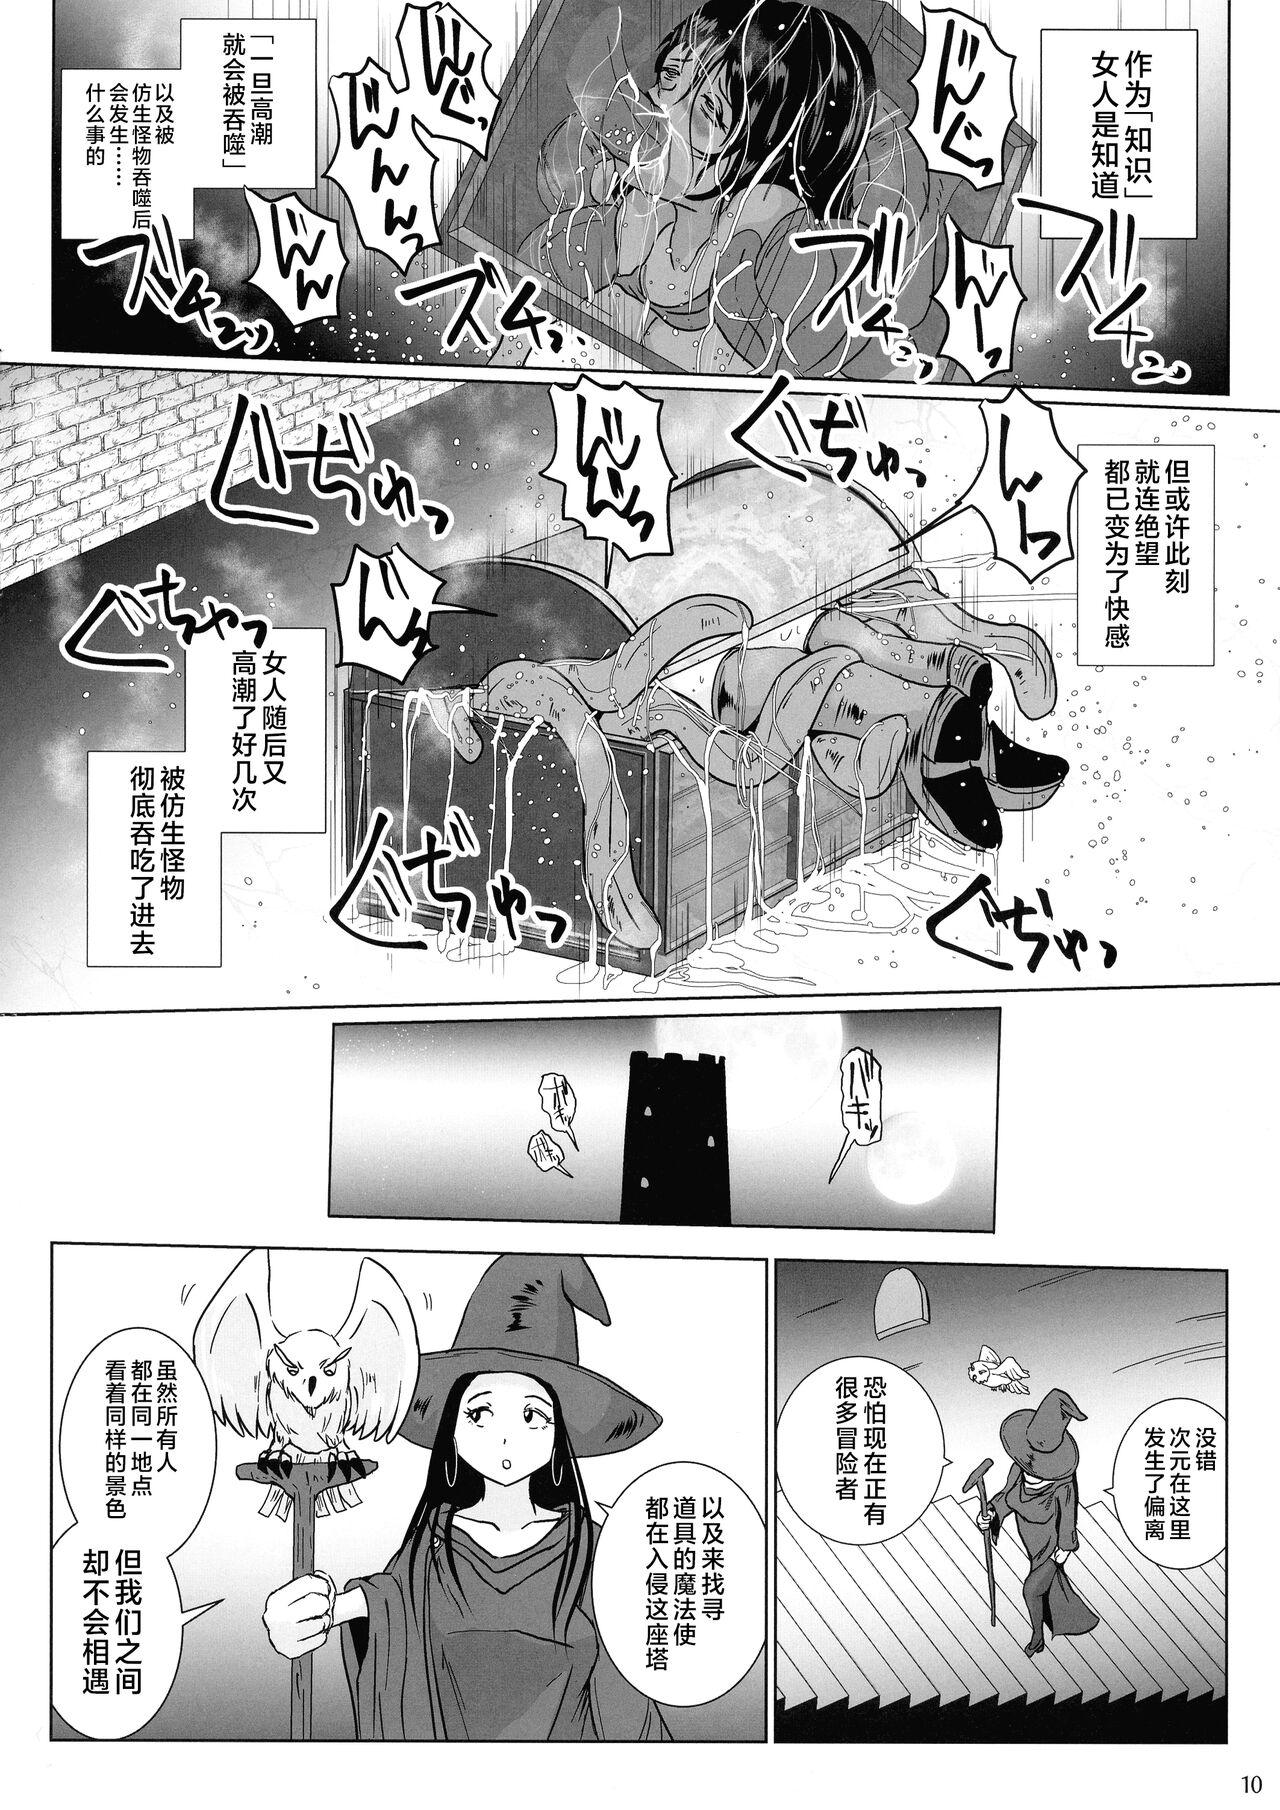 Foreskin Samayoeru Tou no Maru no Mimic - Original Eng Sub - Page 10